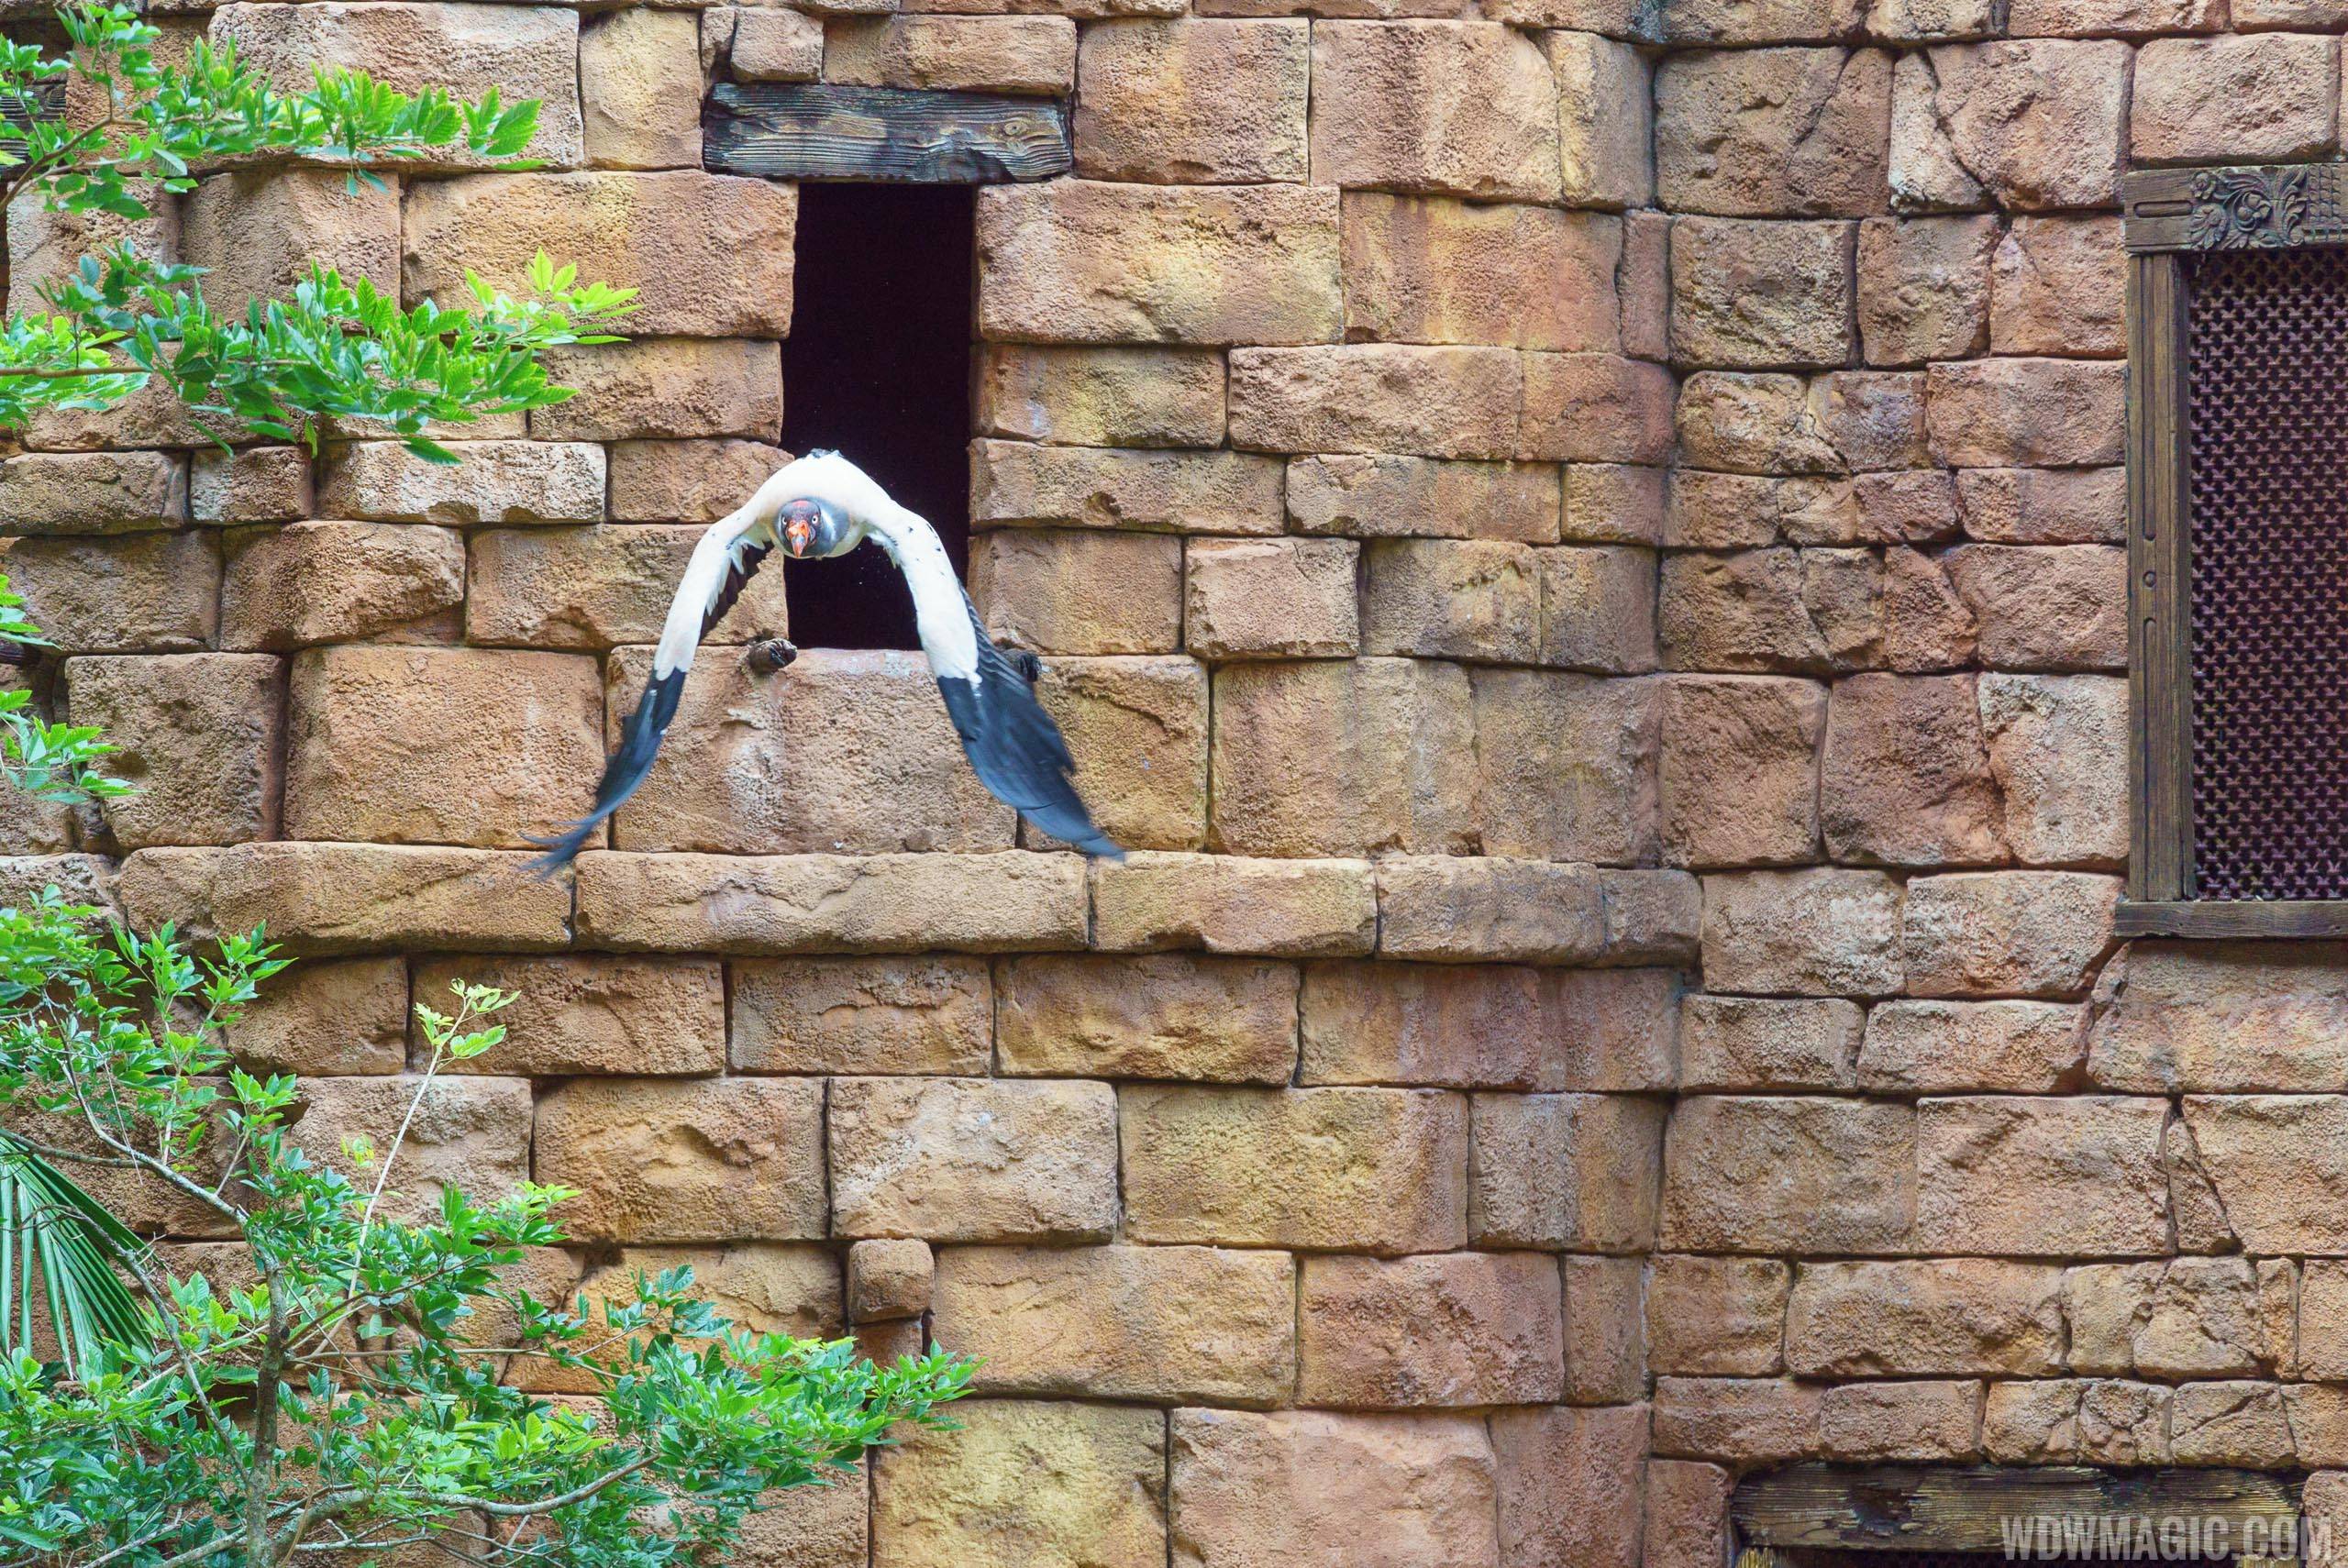 Flights of Wonder at Disney's Animal Kingdom remains closed for new roof installation